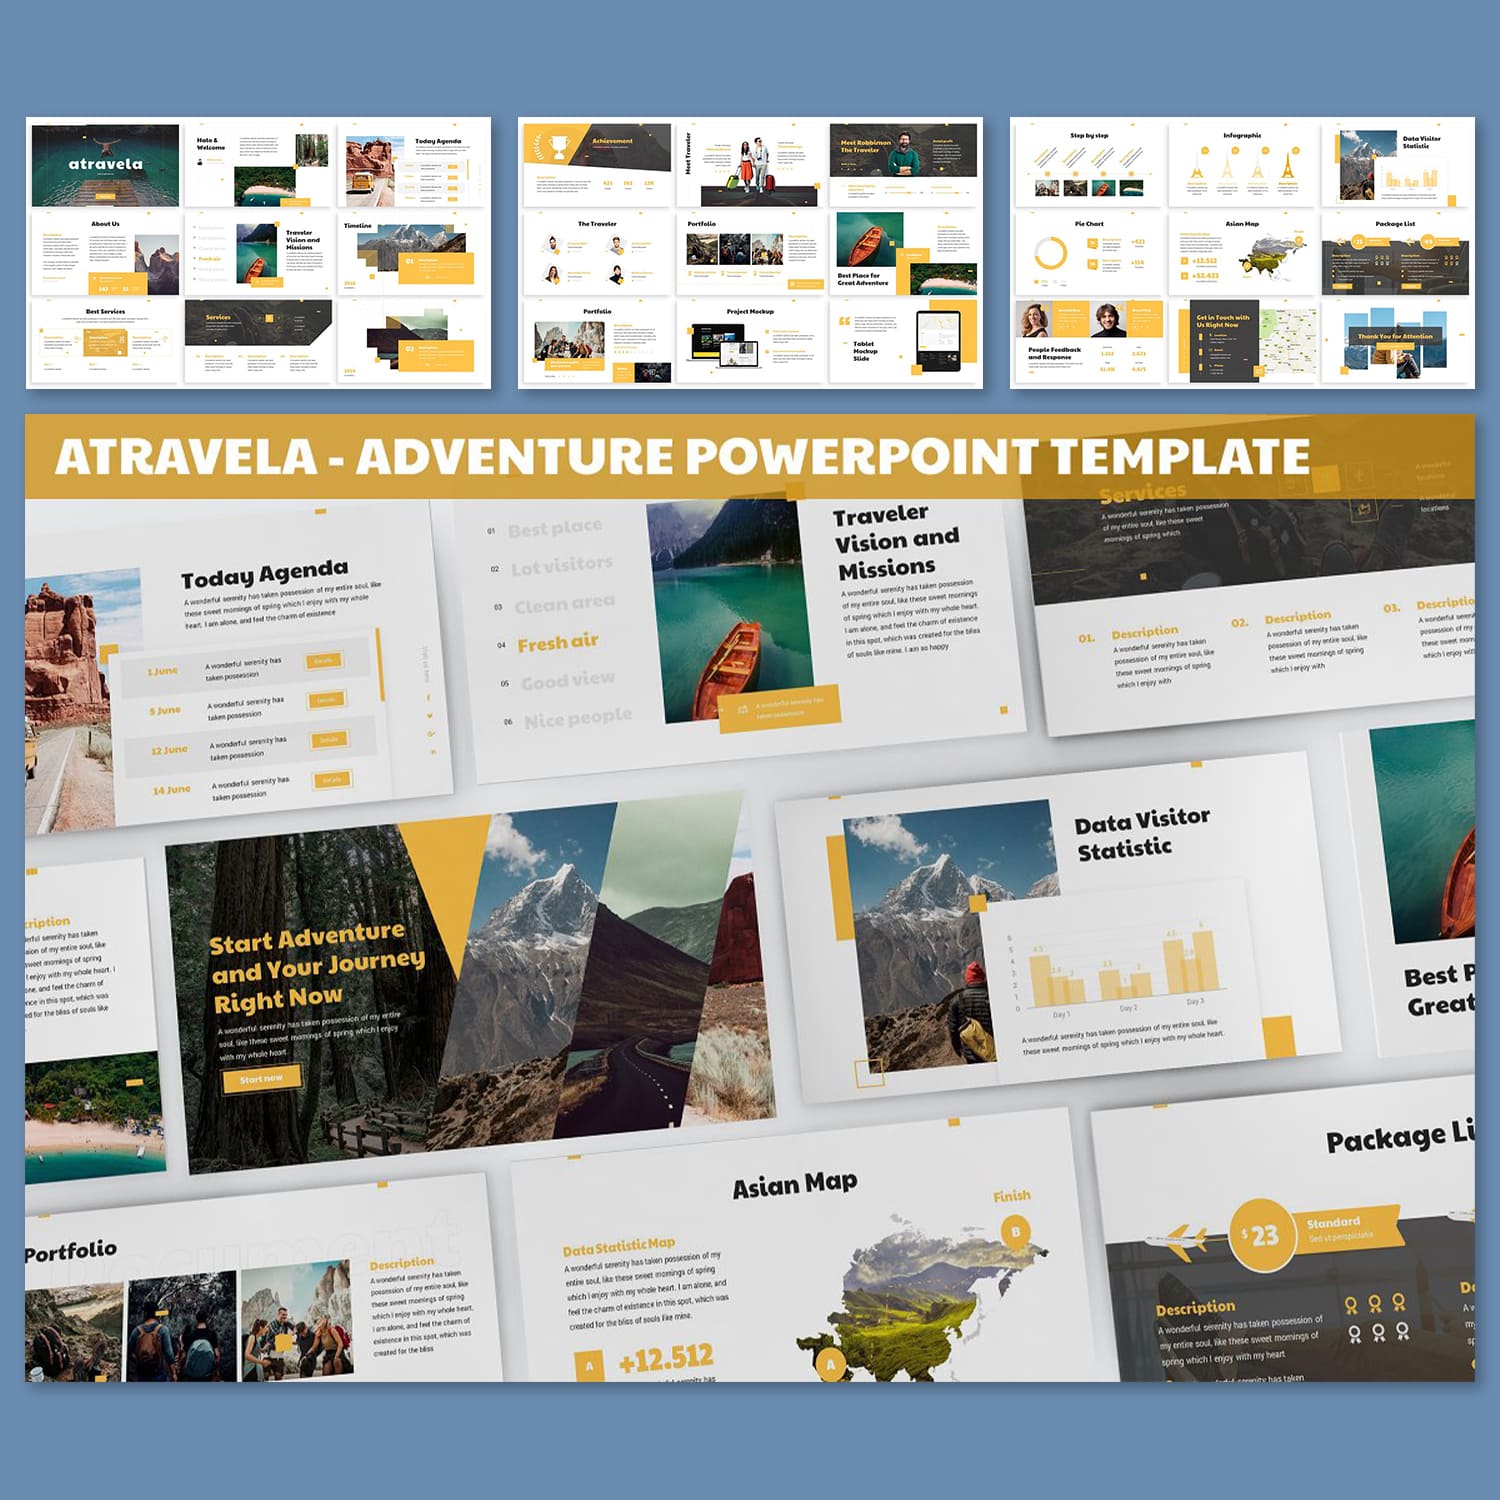 Atravela - Adventure Powerpoint Template main cover.